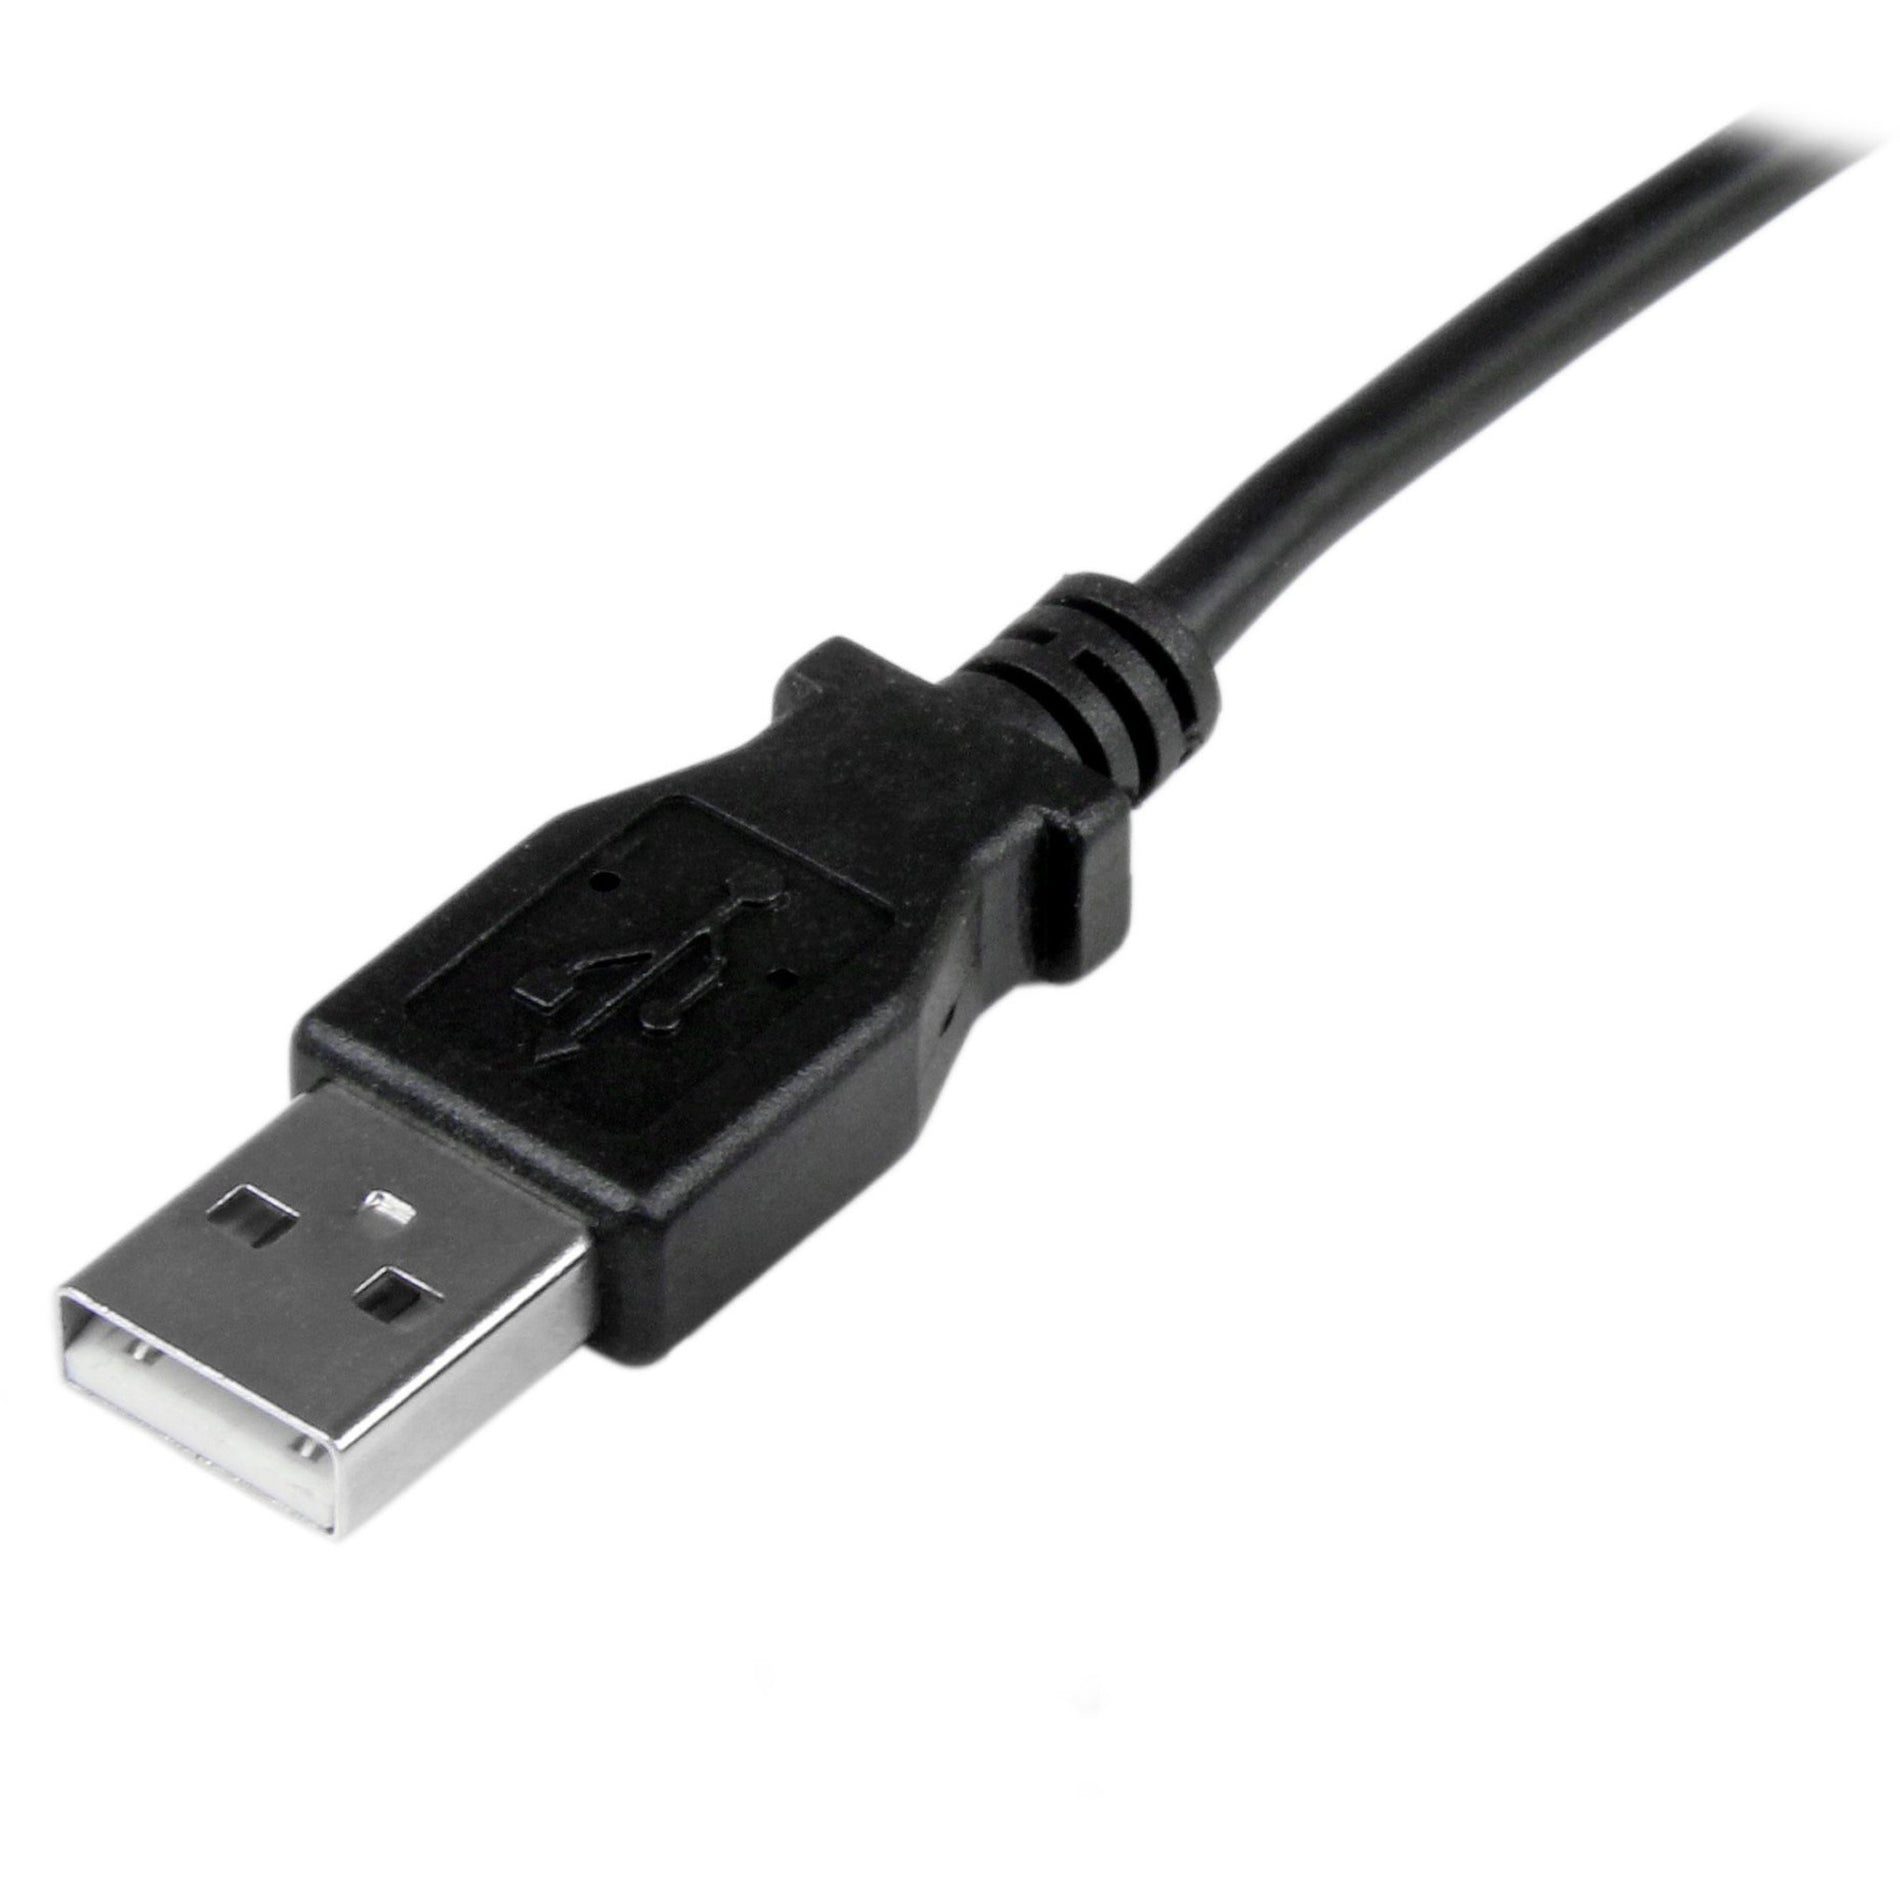 StarTech.com USBAMB1MU 1m Mini USB Kabel - A zu Aufwinkel Mini B Datenübertragungskabel 328 ft Zugentlastung Geformt Schwarz